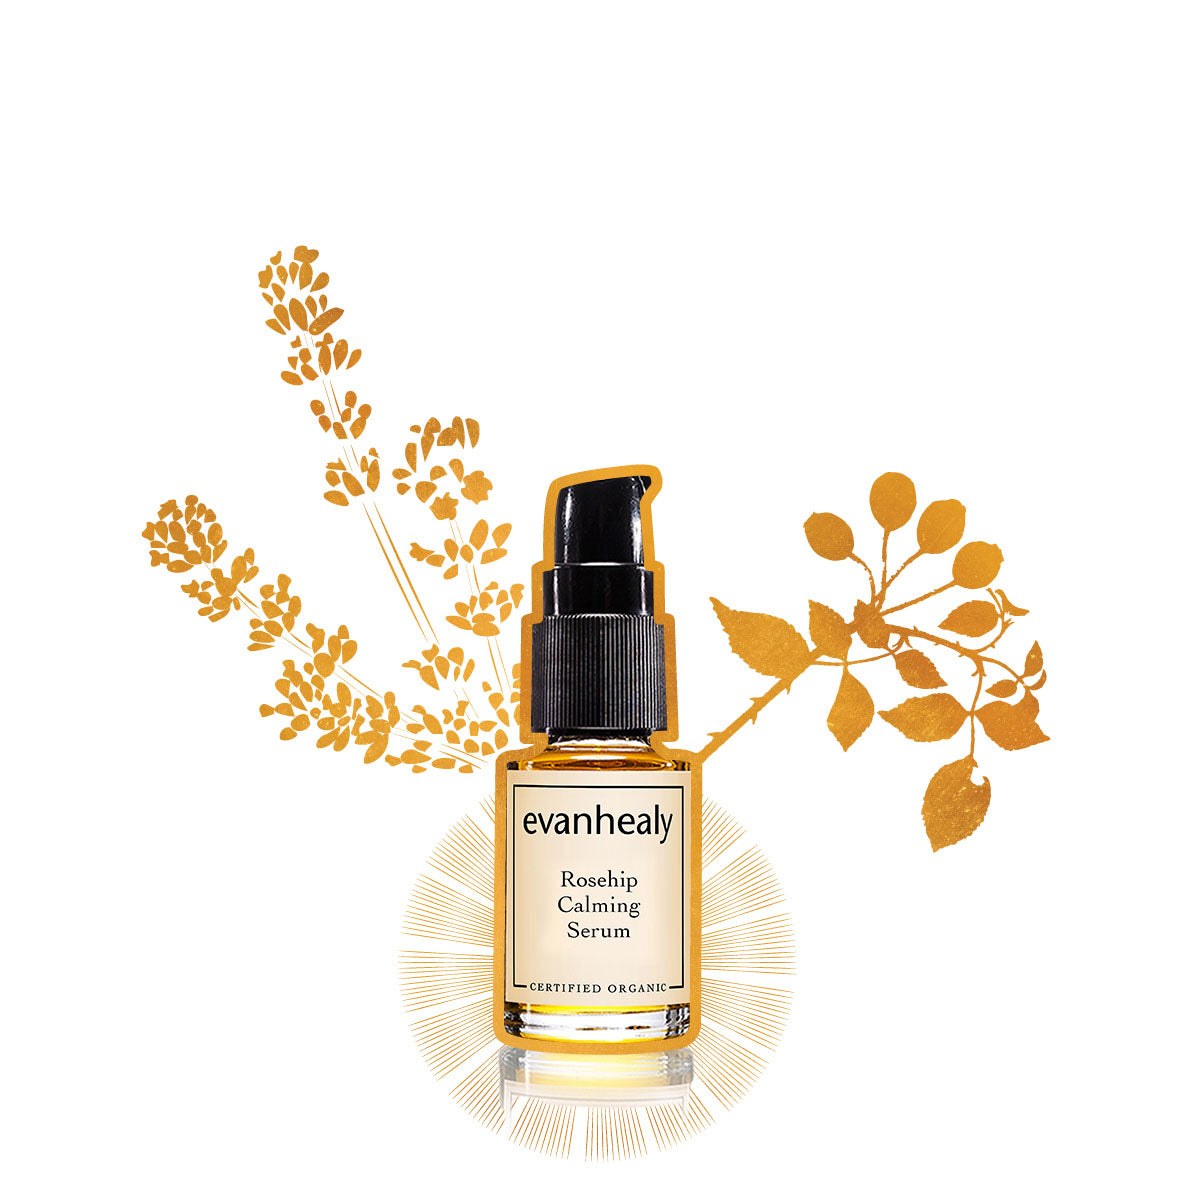 evanhealy rosehip calming facial oil serum for sensitive skin gilded graphic